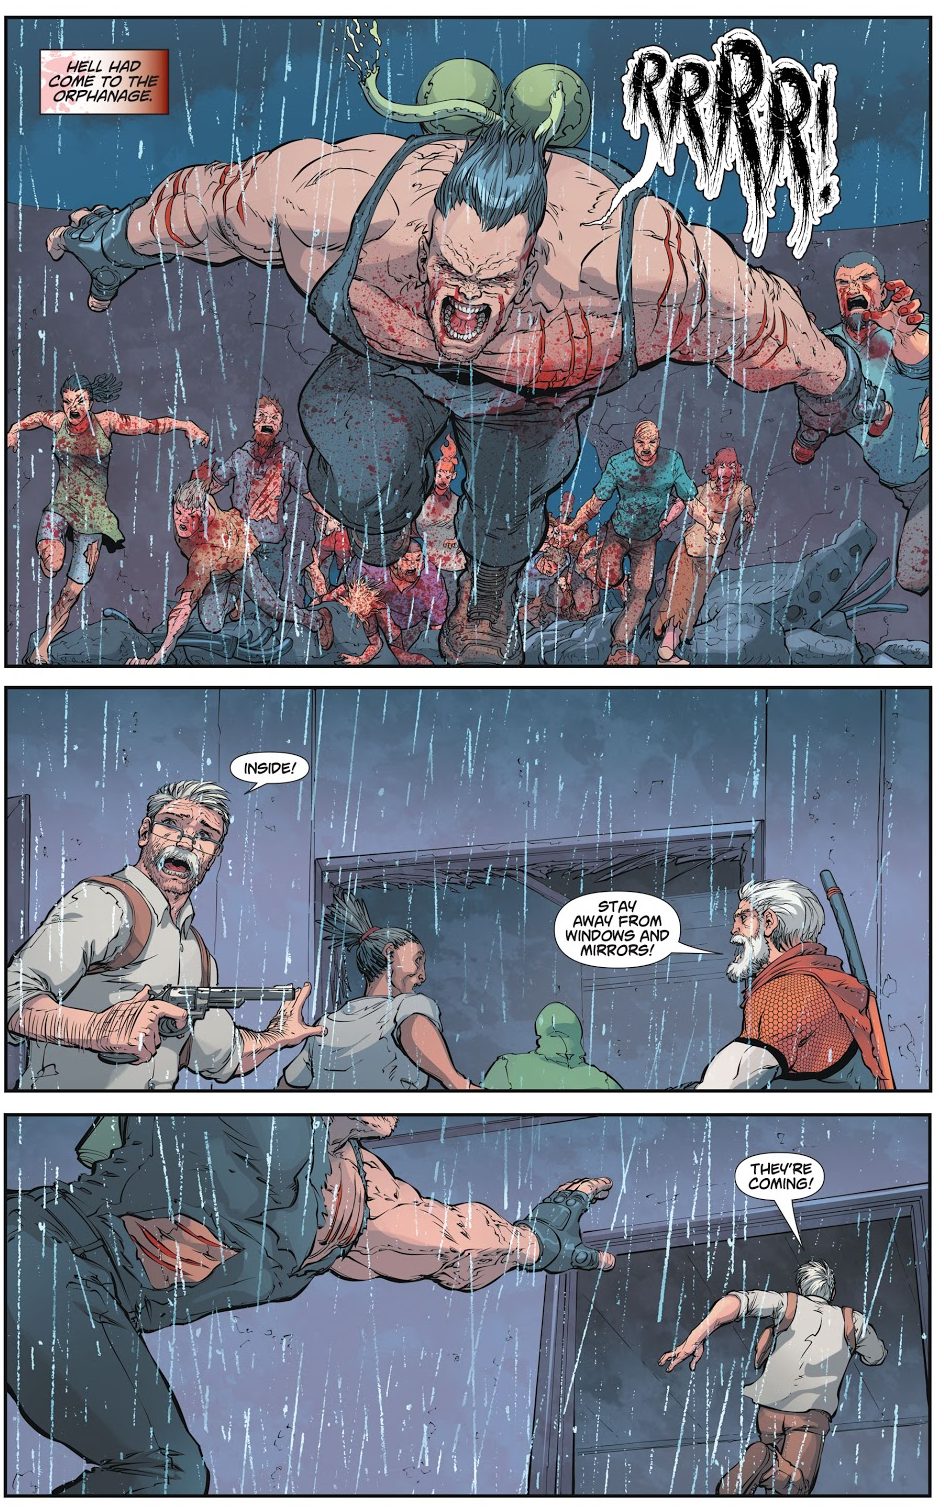 Solomon Grundy Kills Zombie Bane (DCeased)